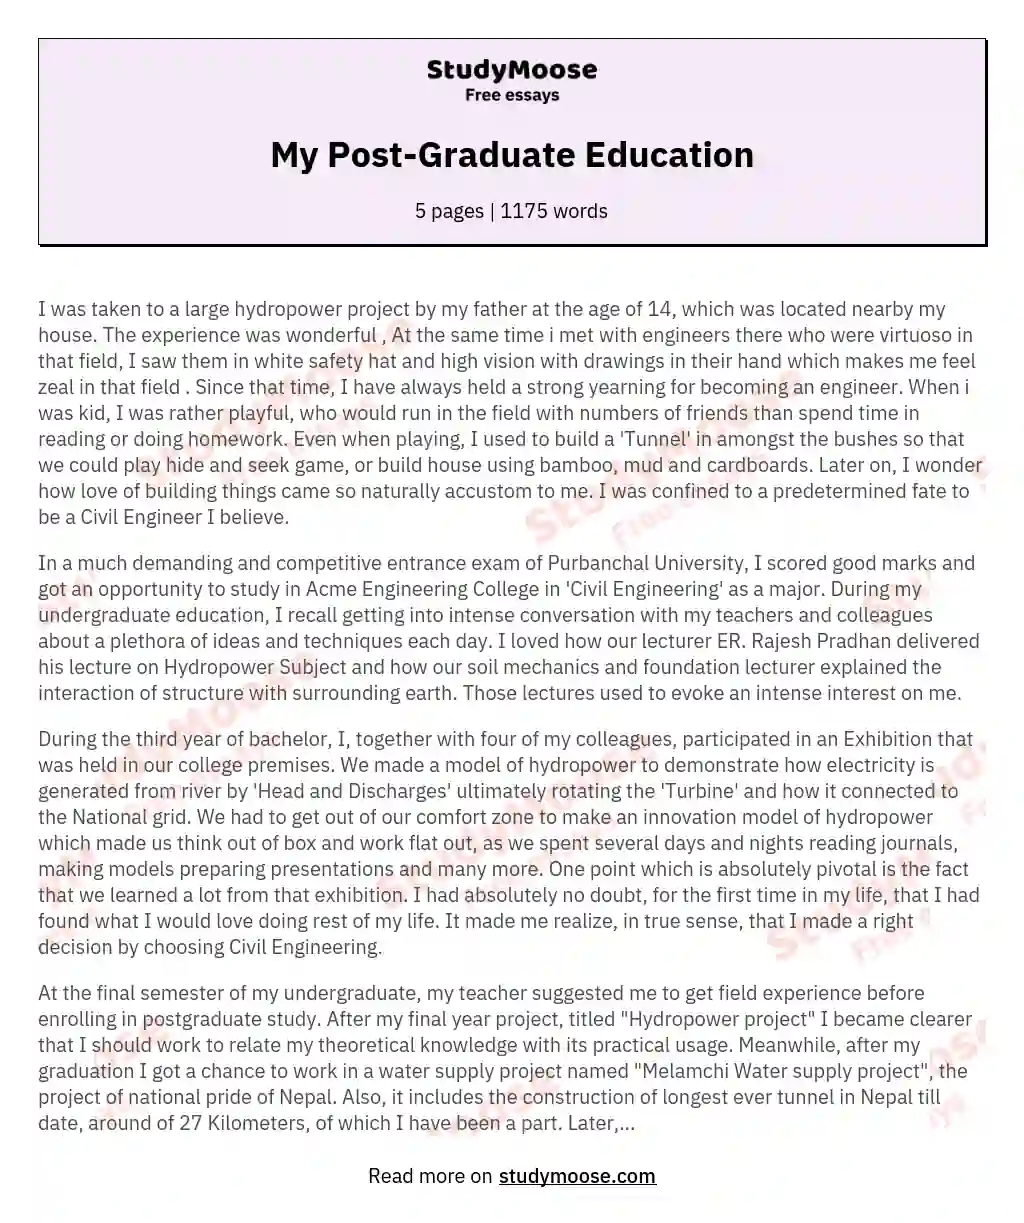 My Post-Graduate Education essay